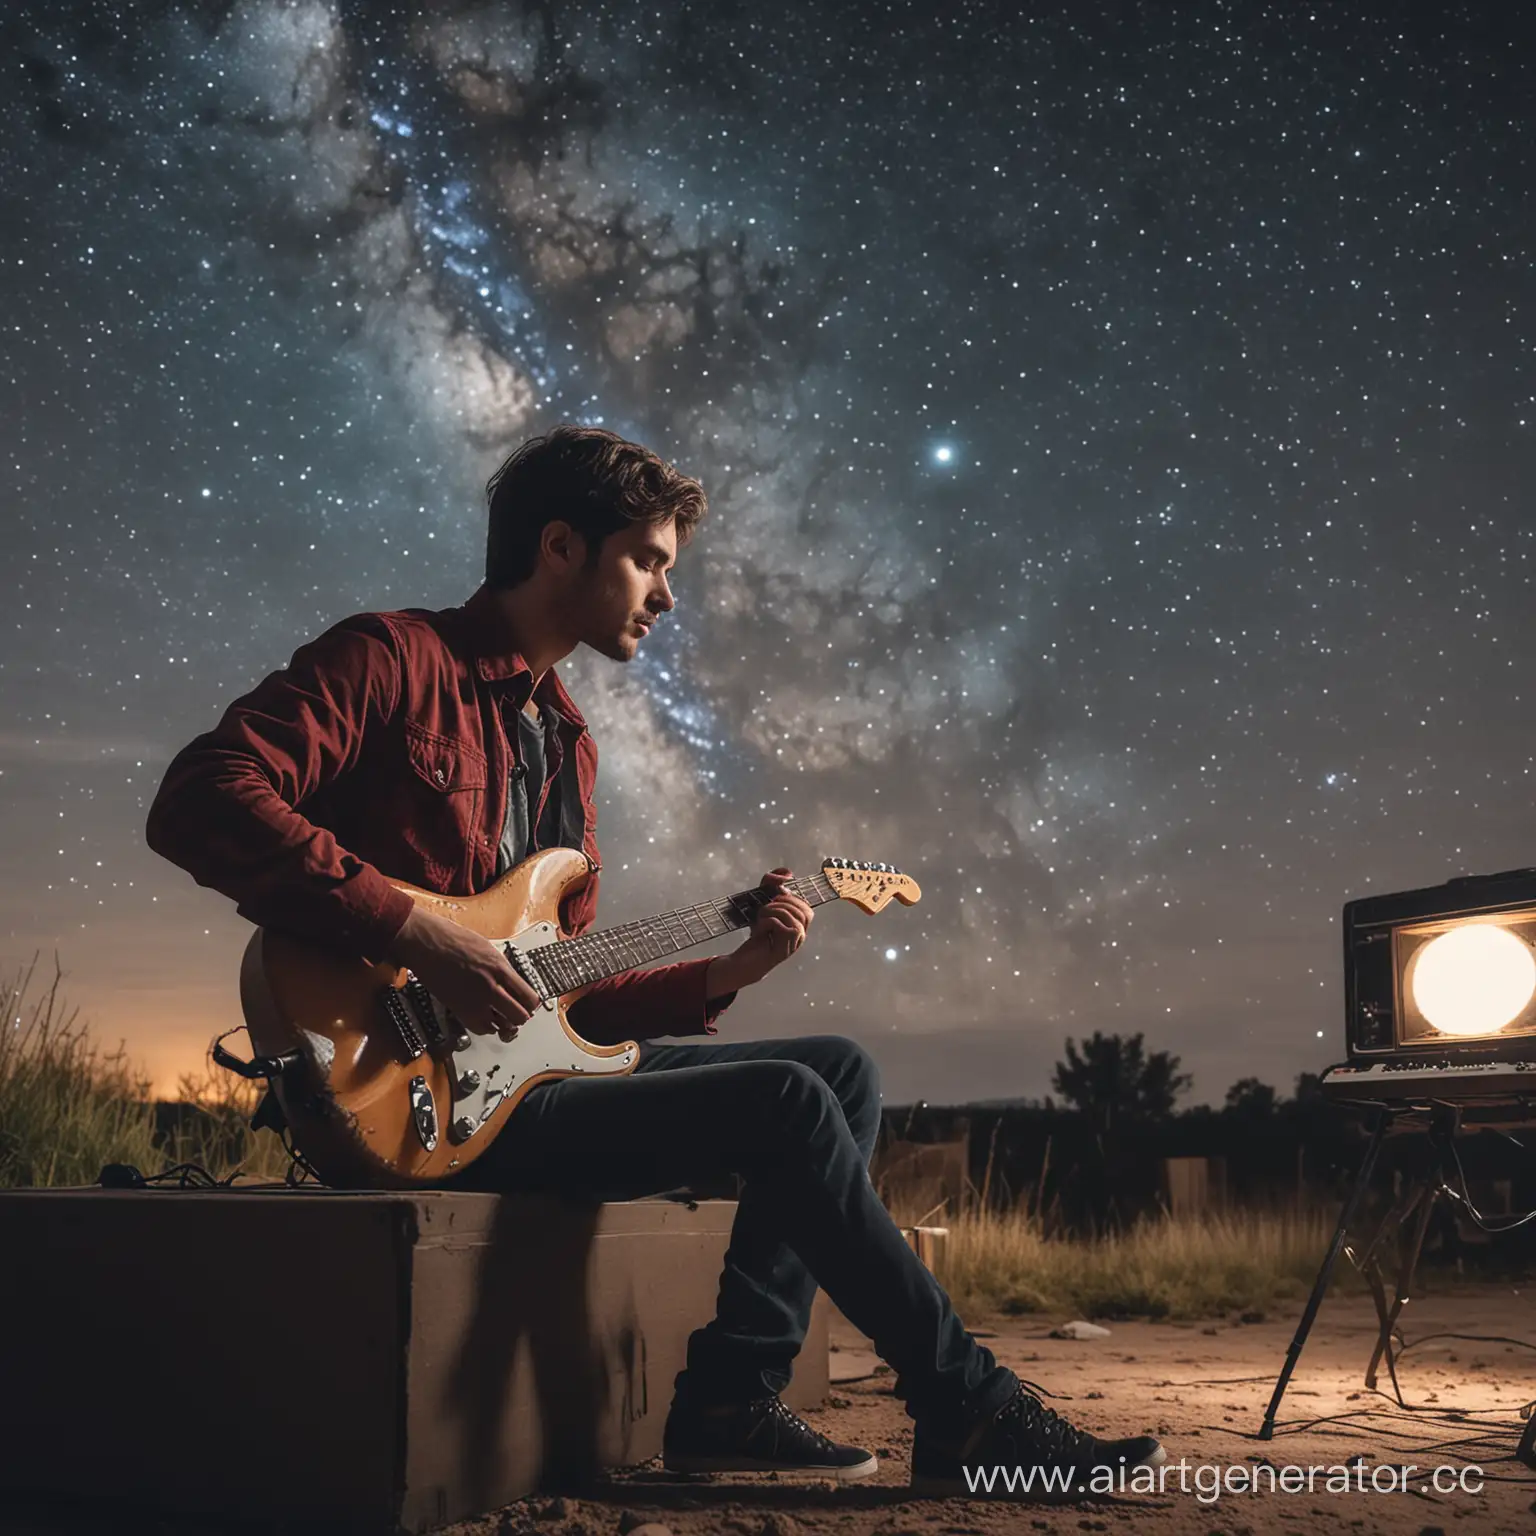 Nighttime-Guitar-Serenade-Musician-Playing-Electric-Guitar-under-Starlit-Sky